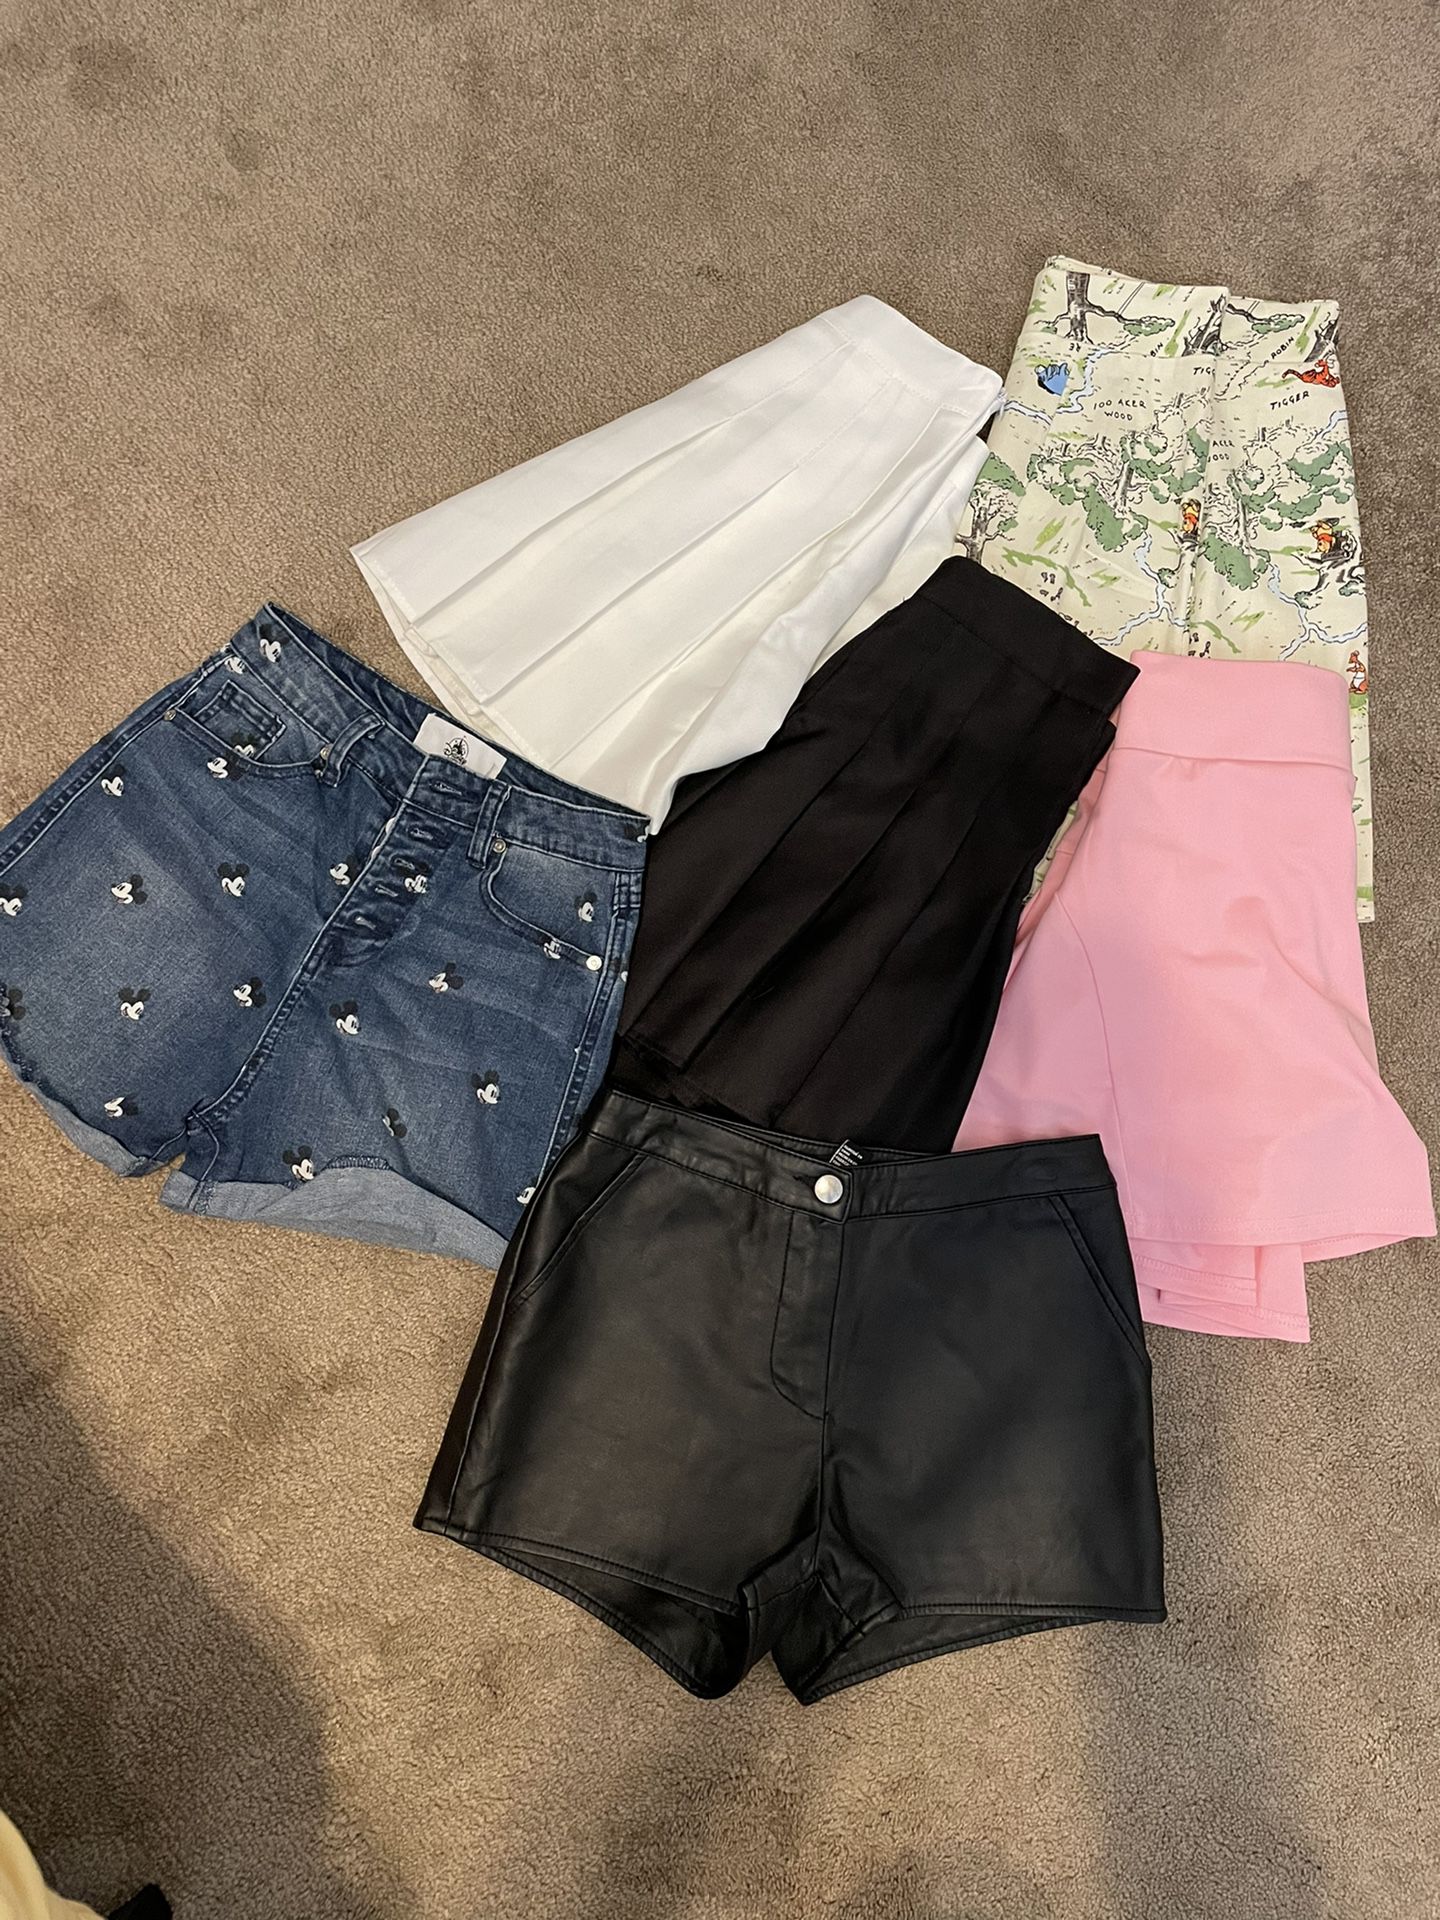 Women’s shorts and skirt